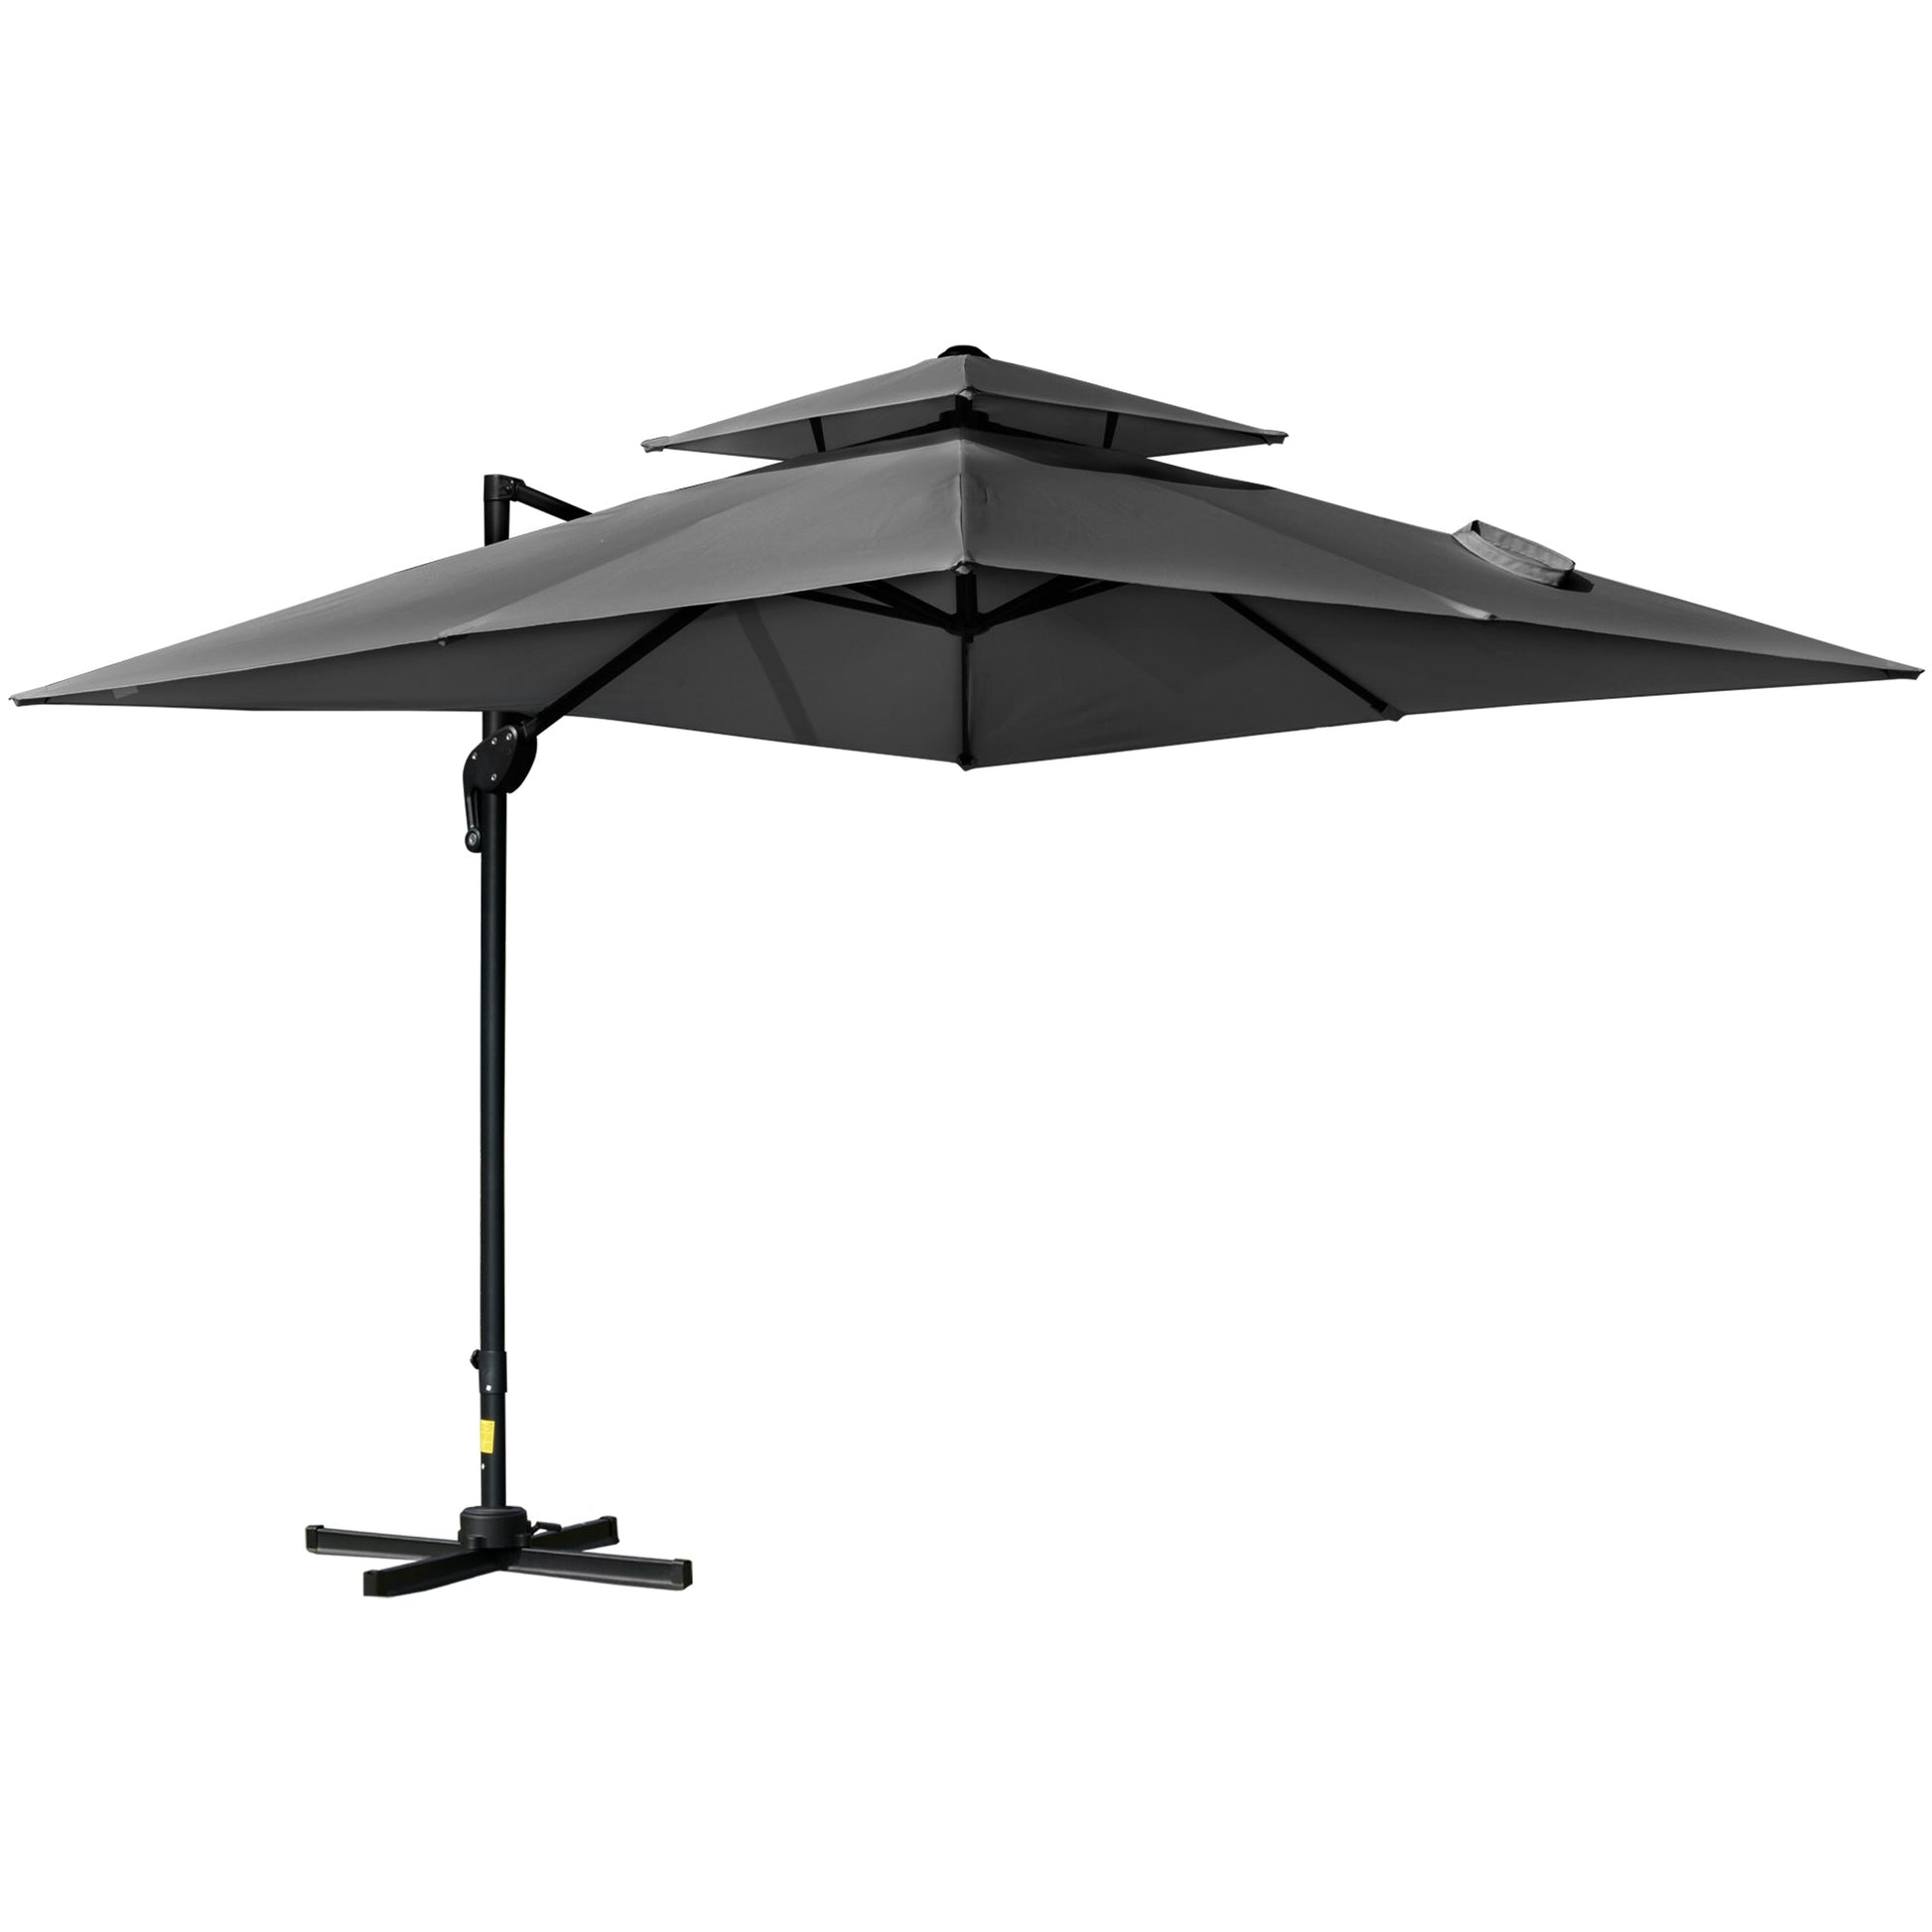 10' x 10' Cantilever Patio Umbrella, Double Top Square Offset Umbrella with 360° Rotation, 5 Adjustable Tilt Angles, Umbrella Cover, Aluminum Pole and Ribs, Charcoal Grey at Gallery Canada